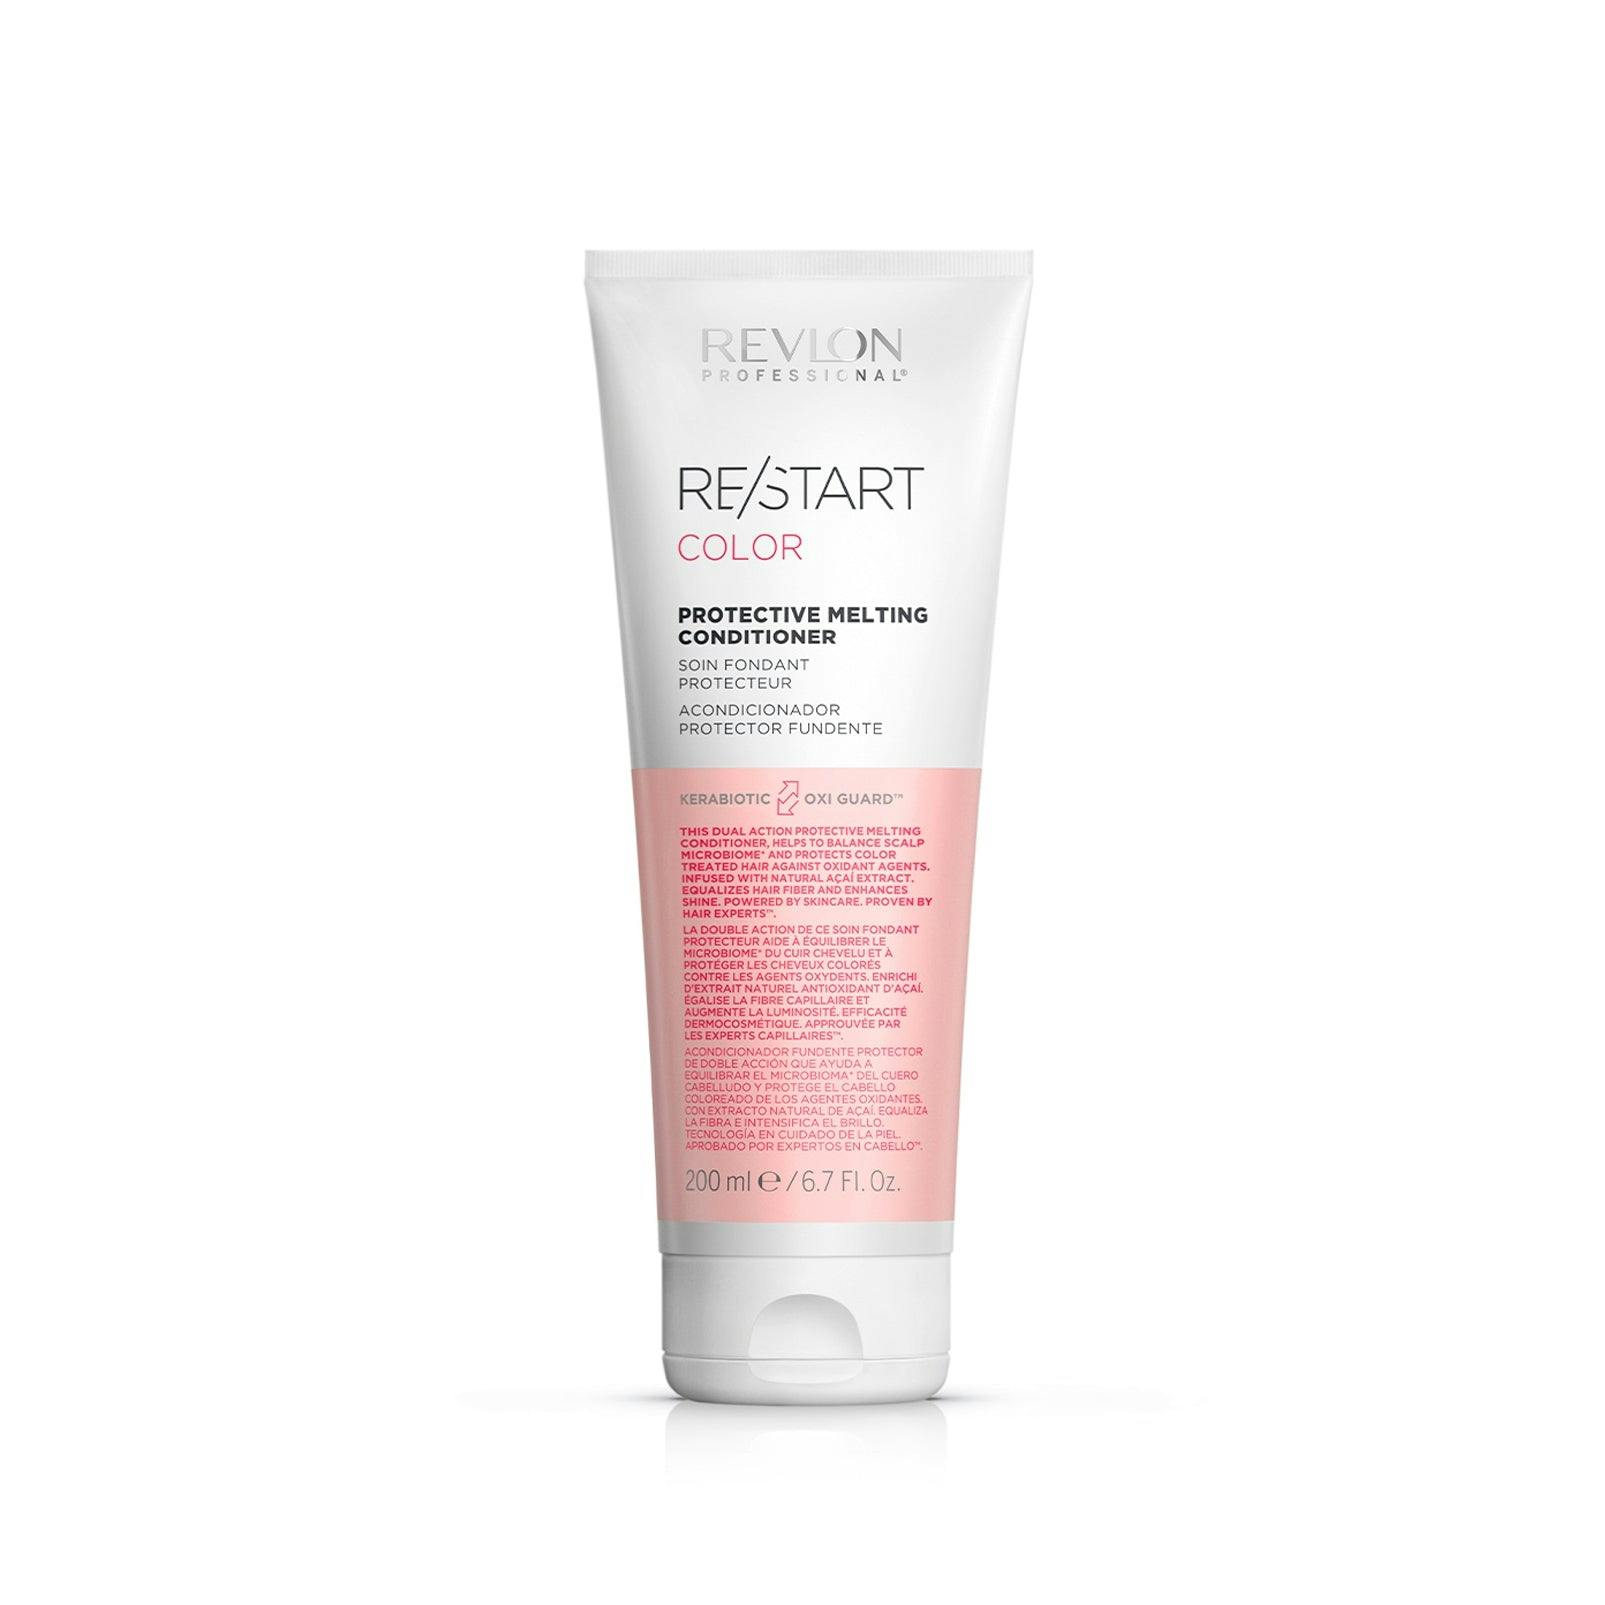 Revlon Professional Restart Color 250ml Shampoo Hair & Protective OZ Beauty 